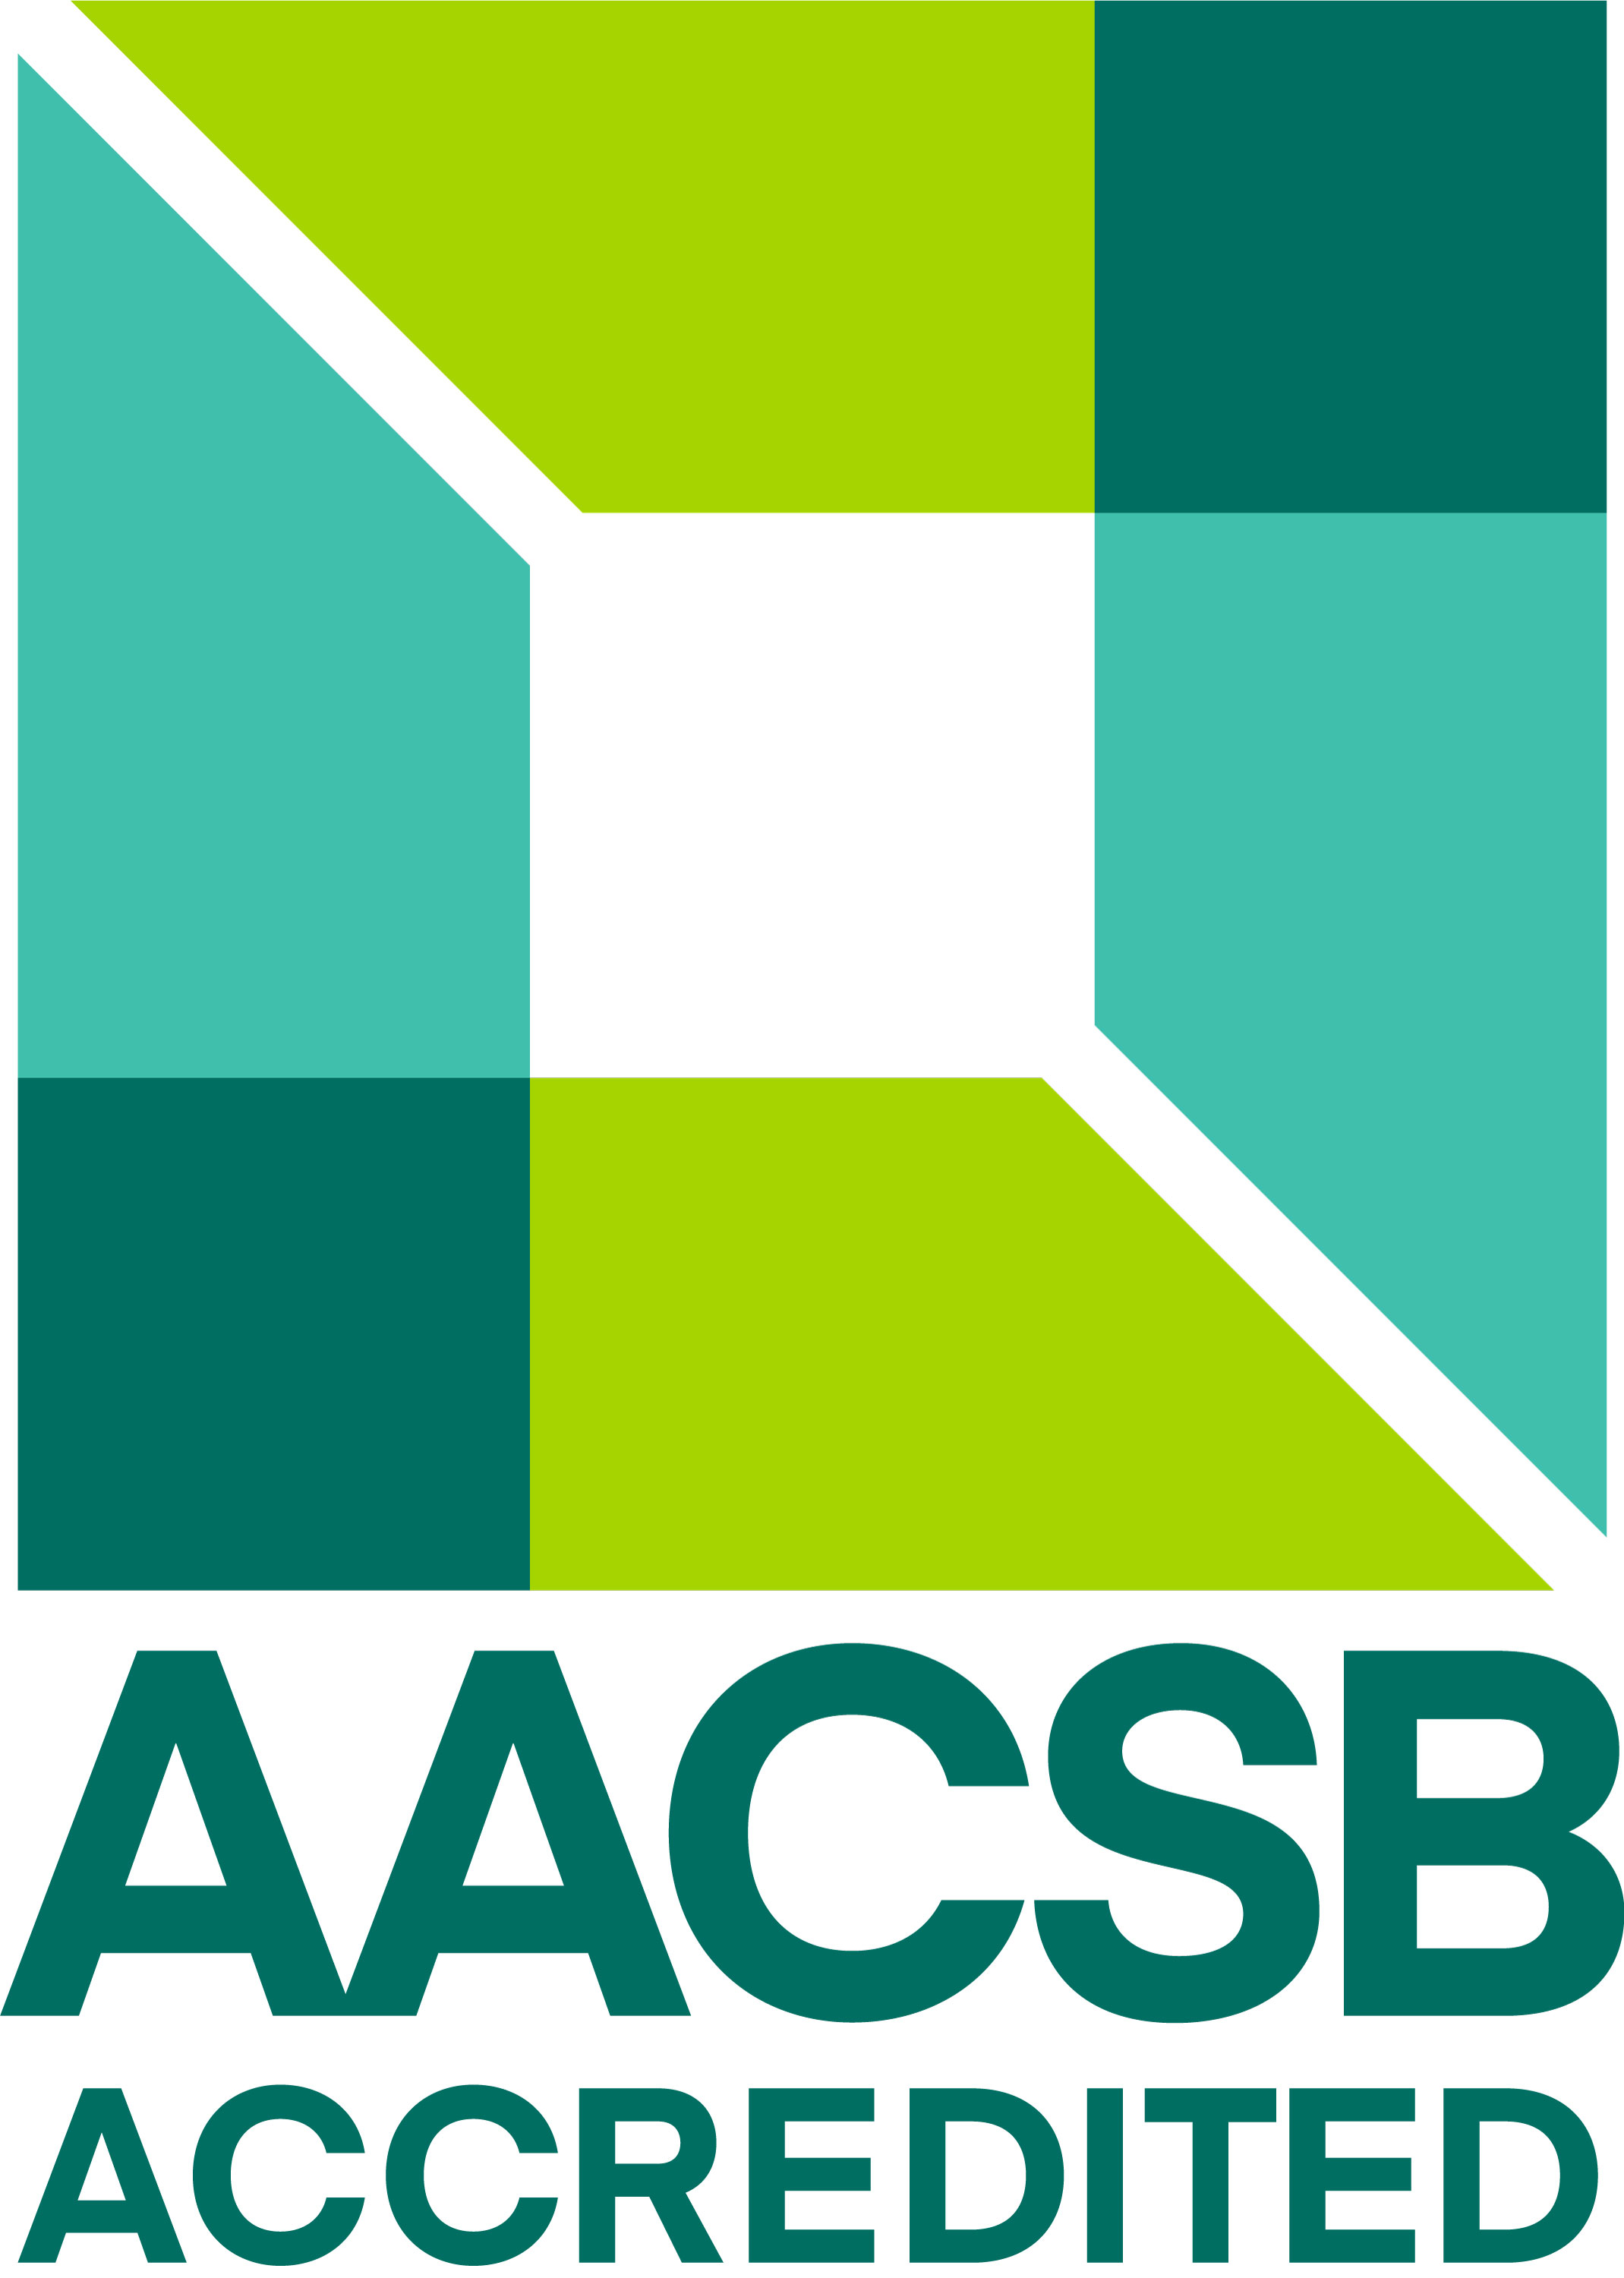 aacsb-logo-accredited-vert.jpg